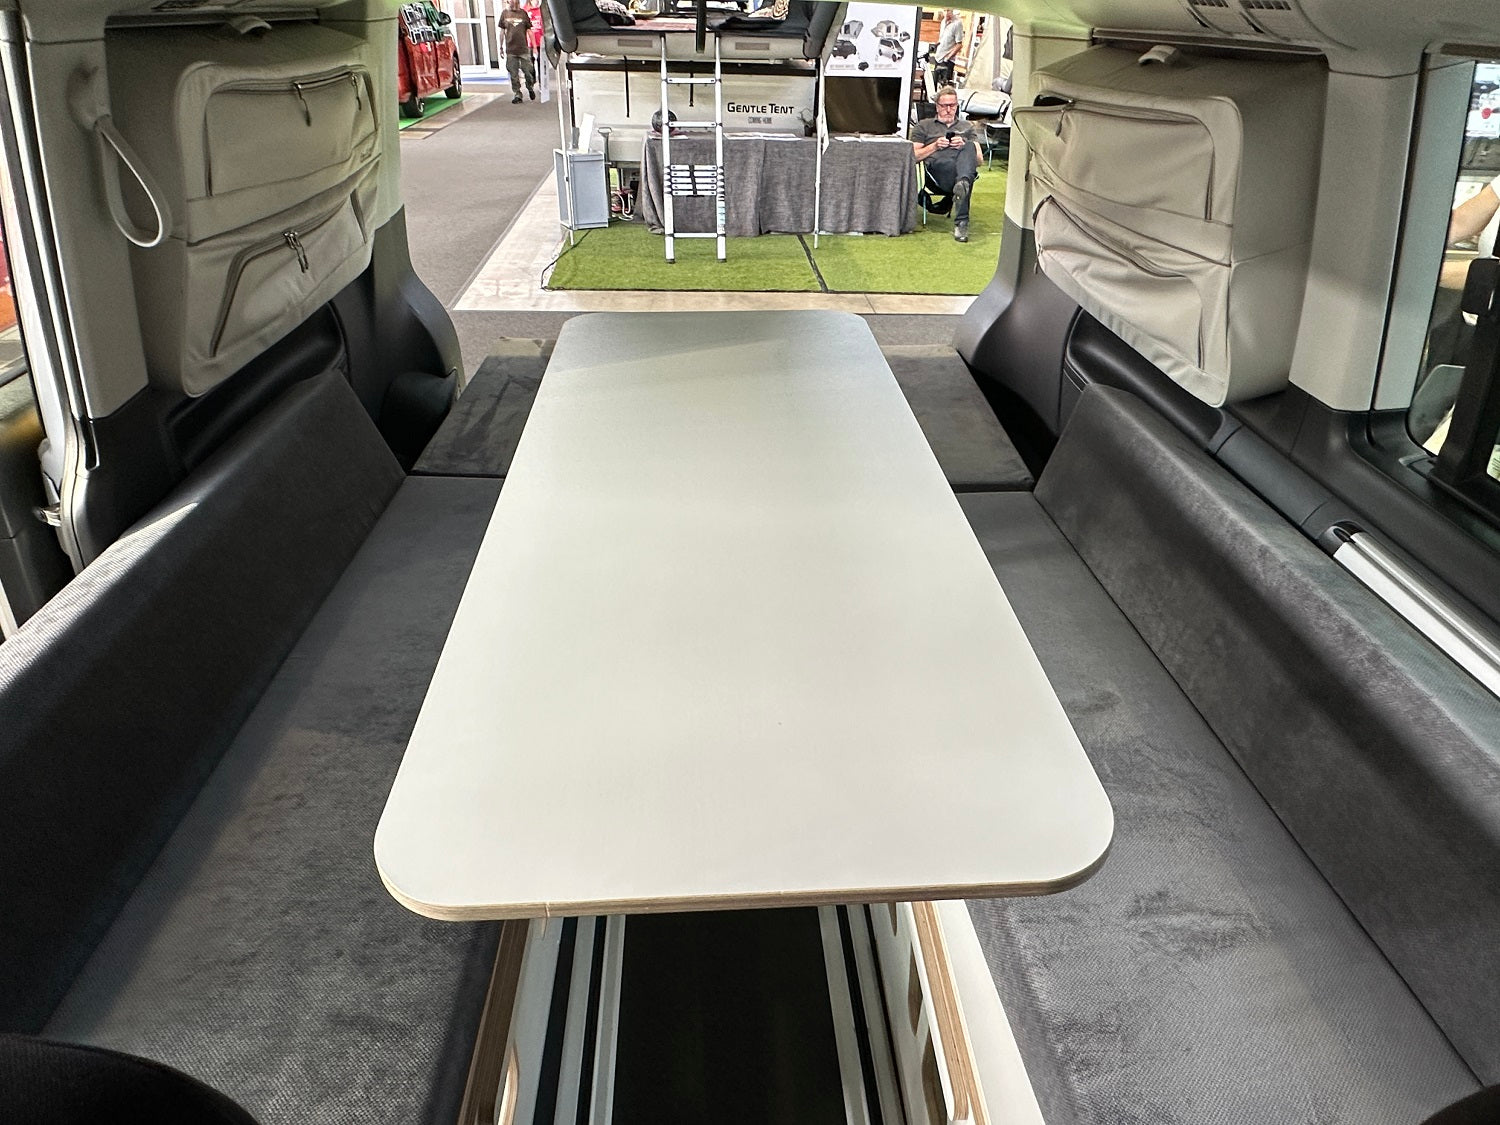 Moonbox Campingbox mit Tisch Van/Bus 119cm Modify Weiß